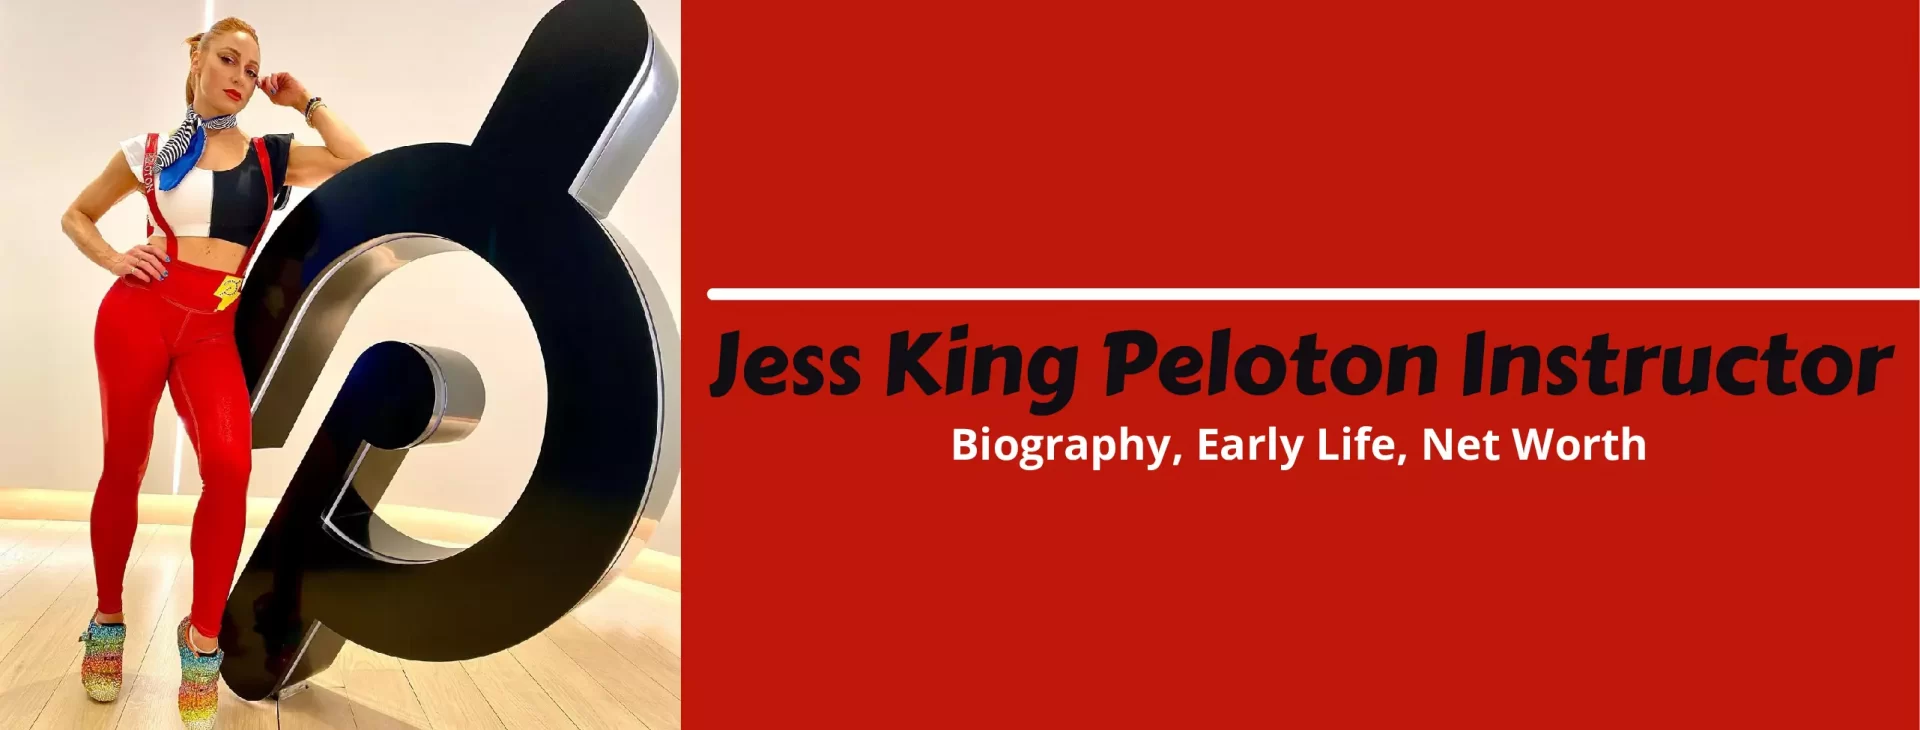 Jess King Peloton Instructor